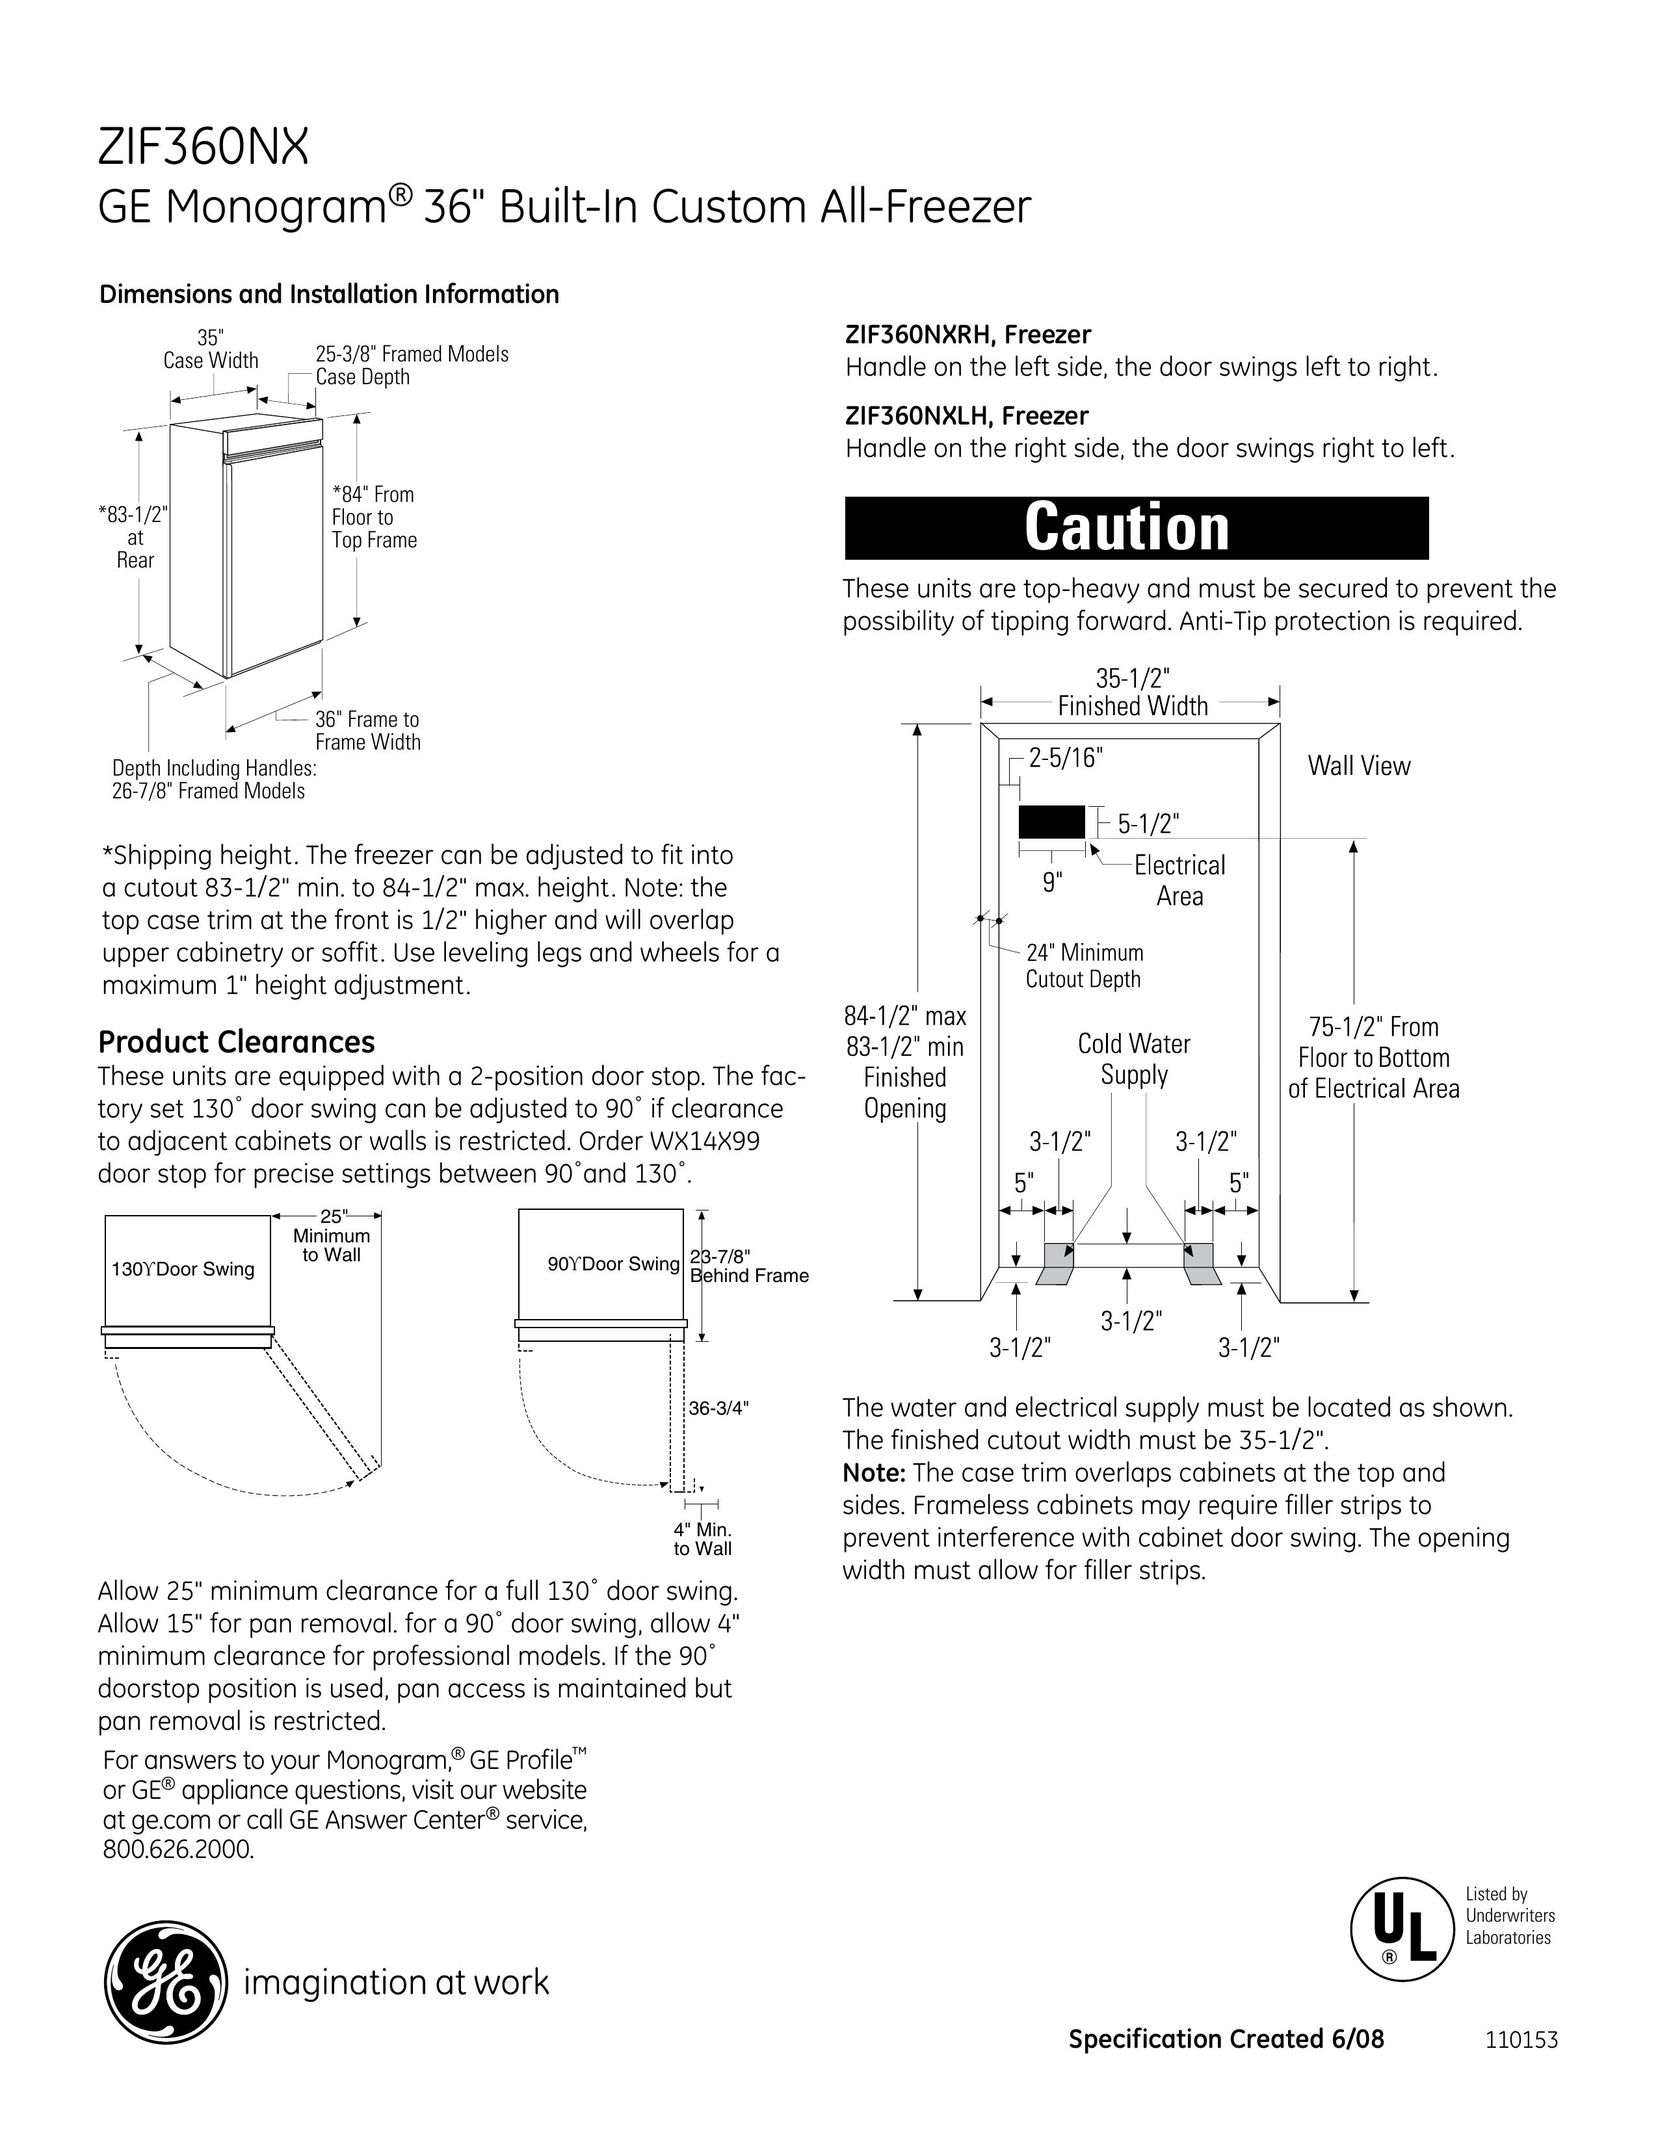 GE Monogram ZIF360NXRH Freezer User Manual